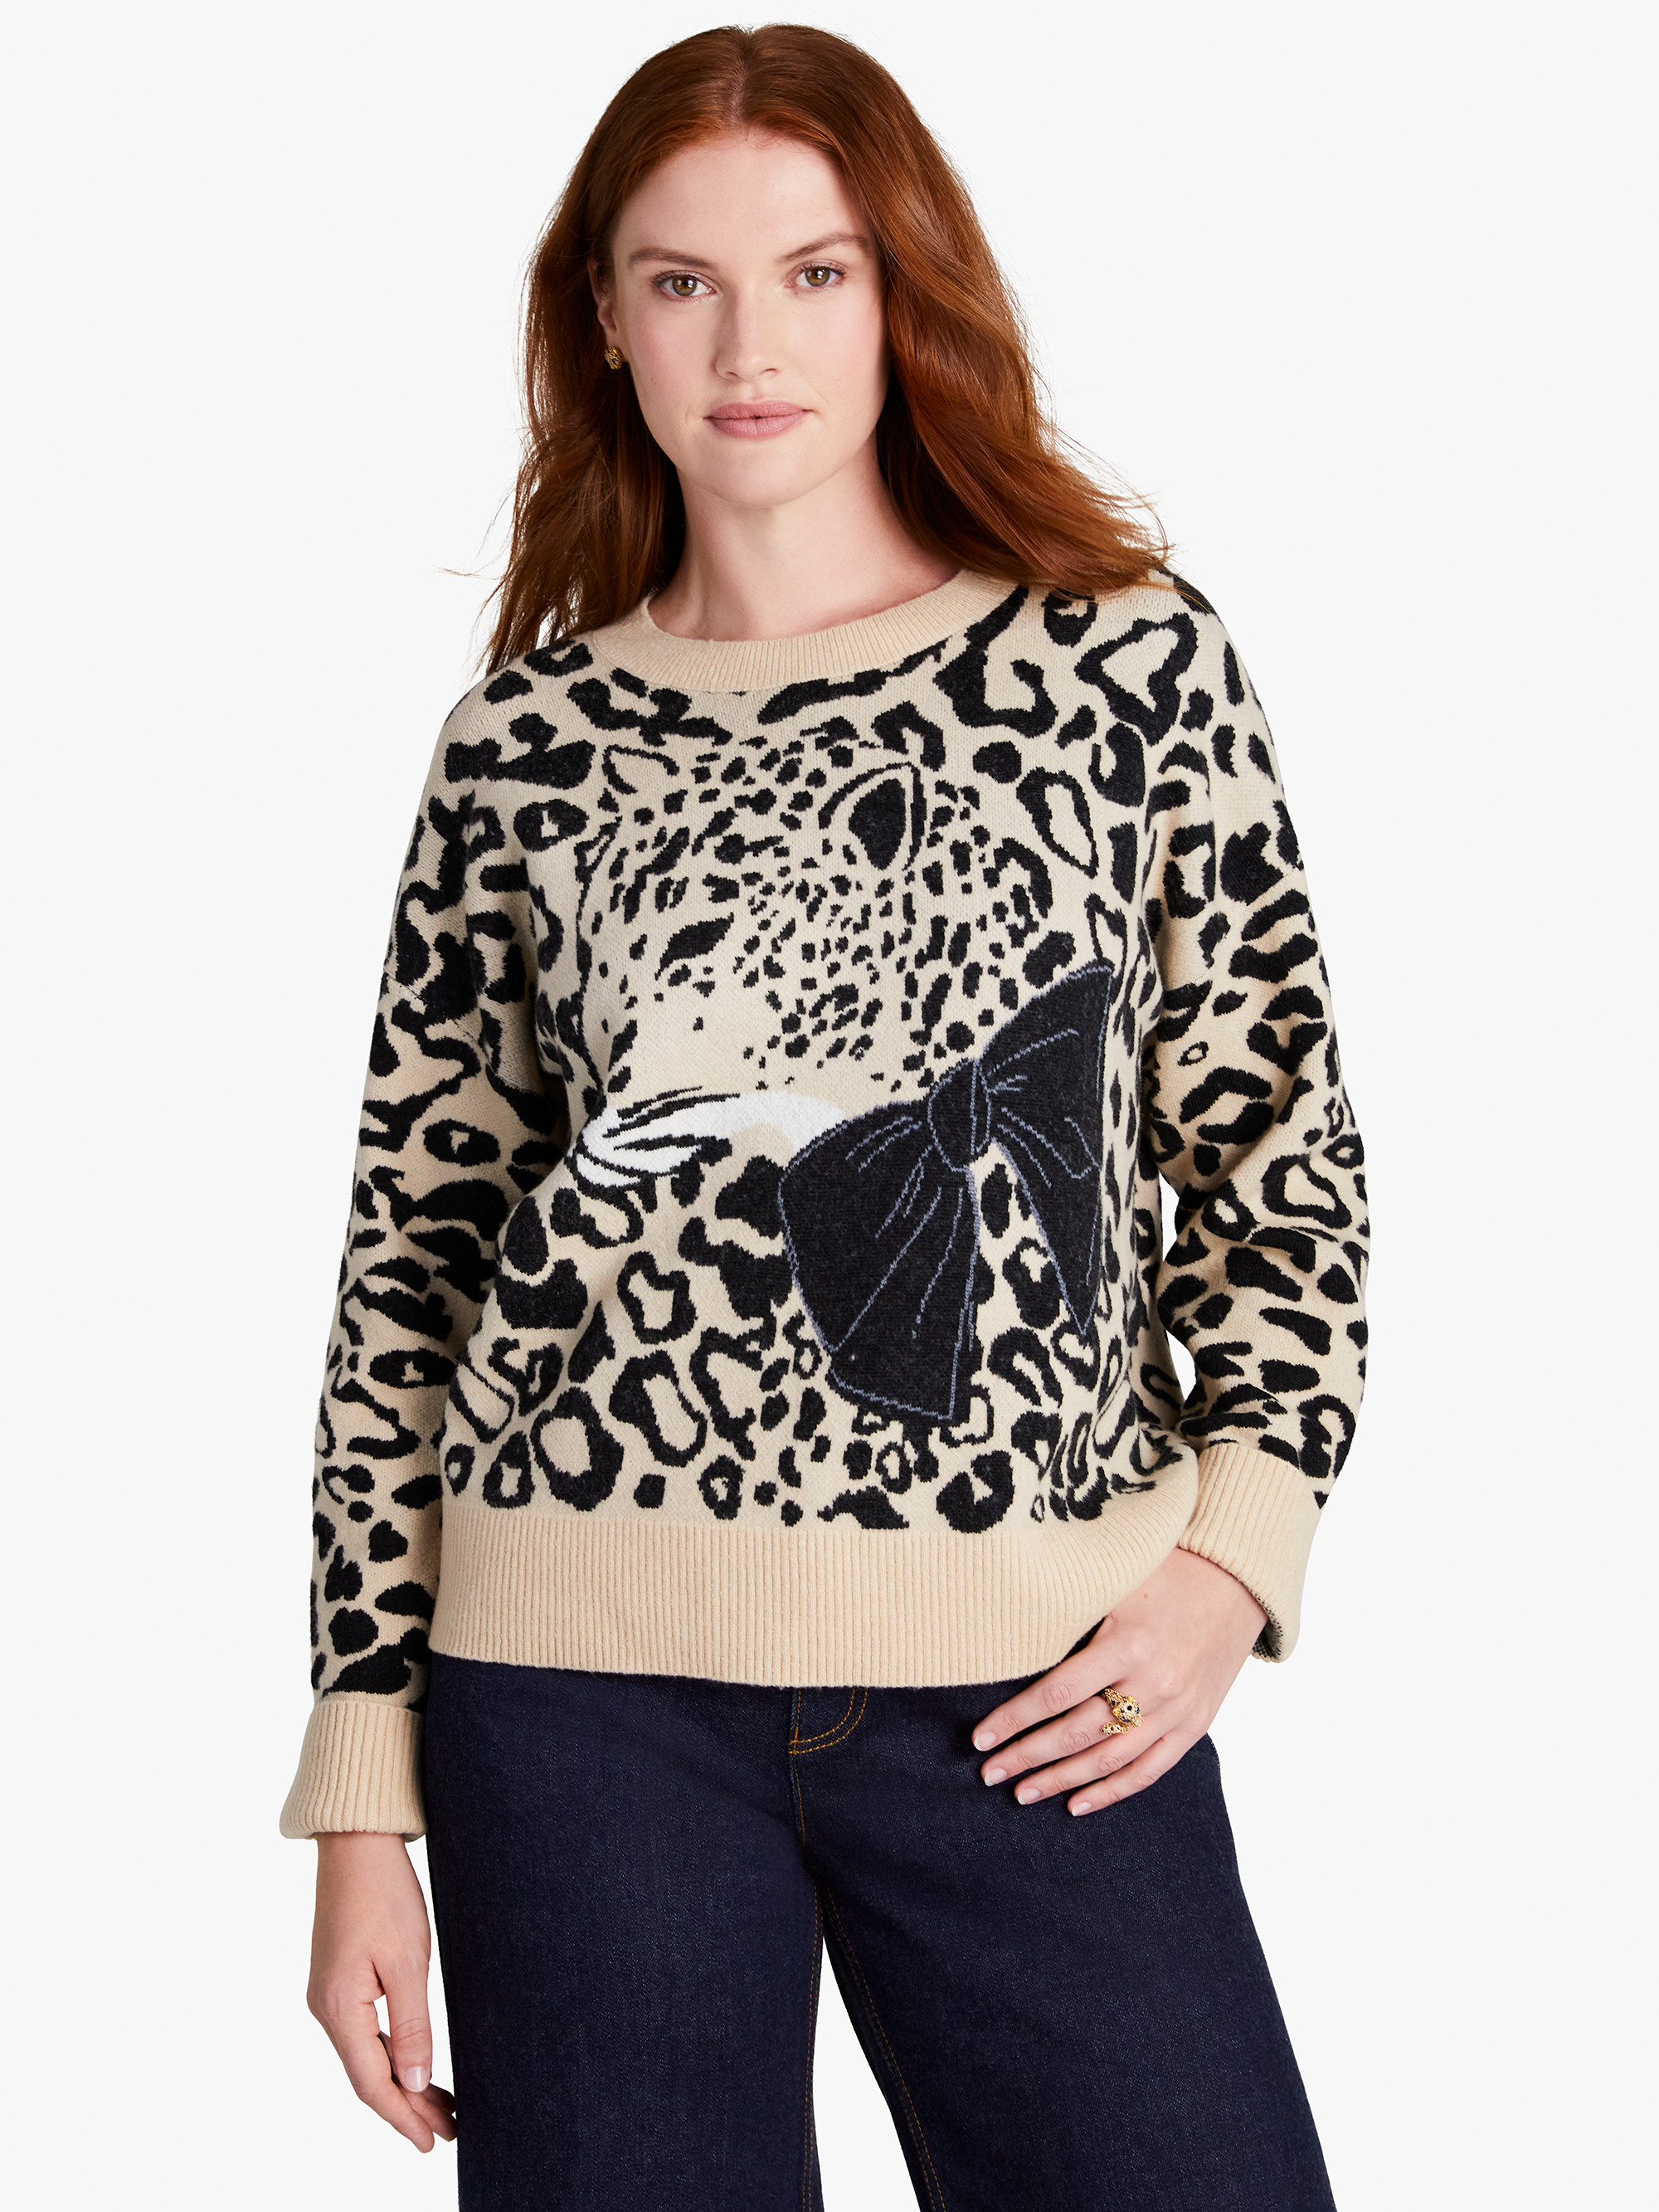 Kate Spade Leopard Bow Sweater